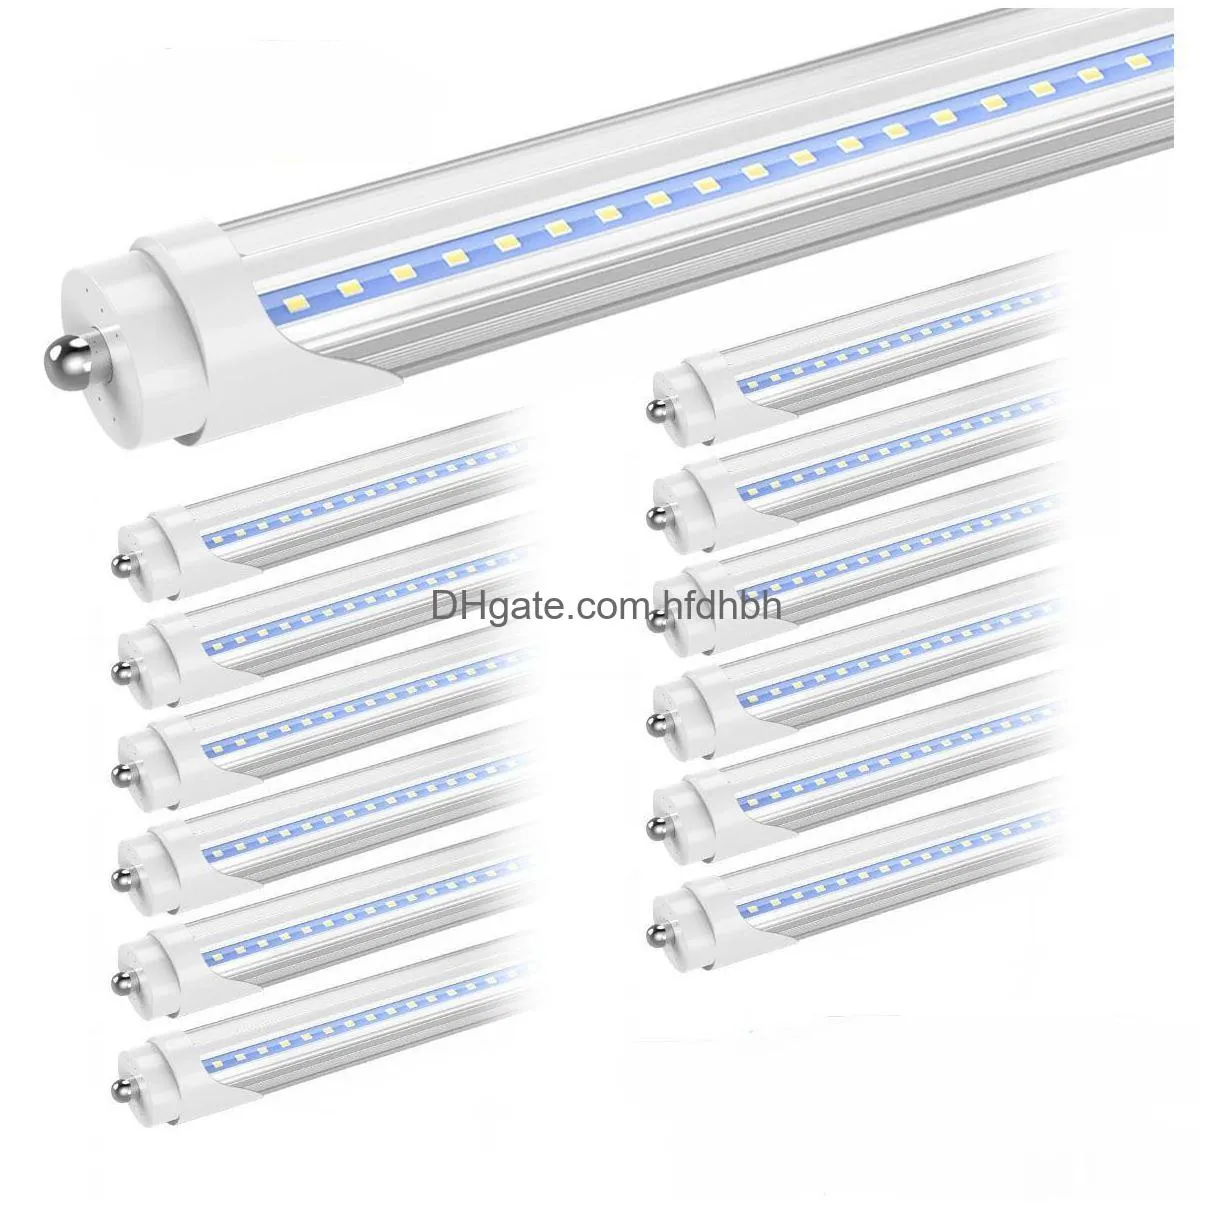 8 45 watt bulbs 8ft led tubes single pin fa8 t8 led tube light 8 ft 8feet 45w leds lights lamp